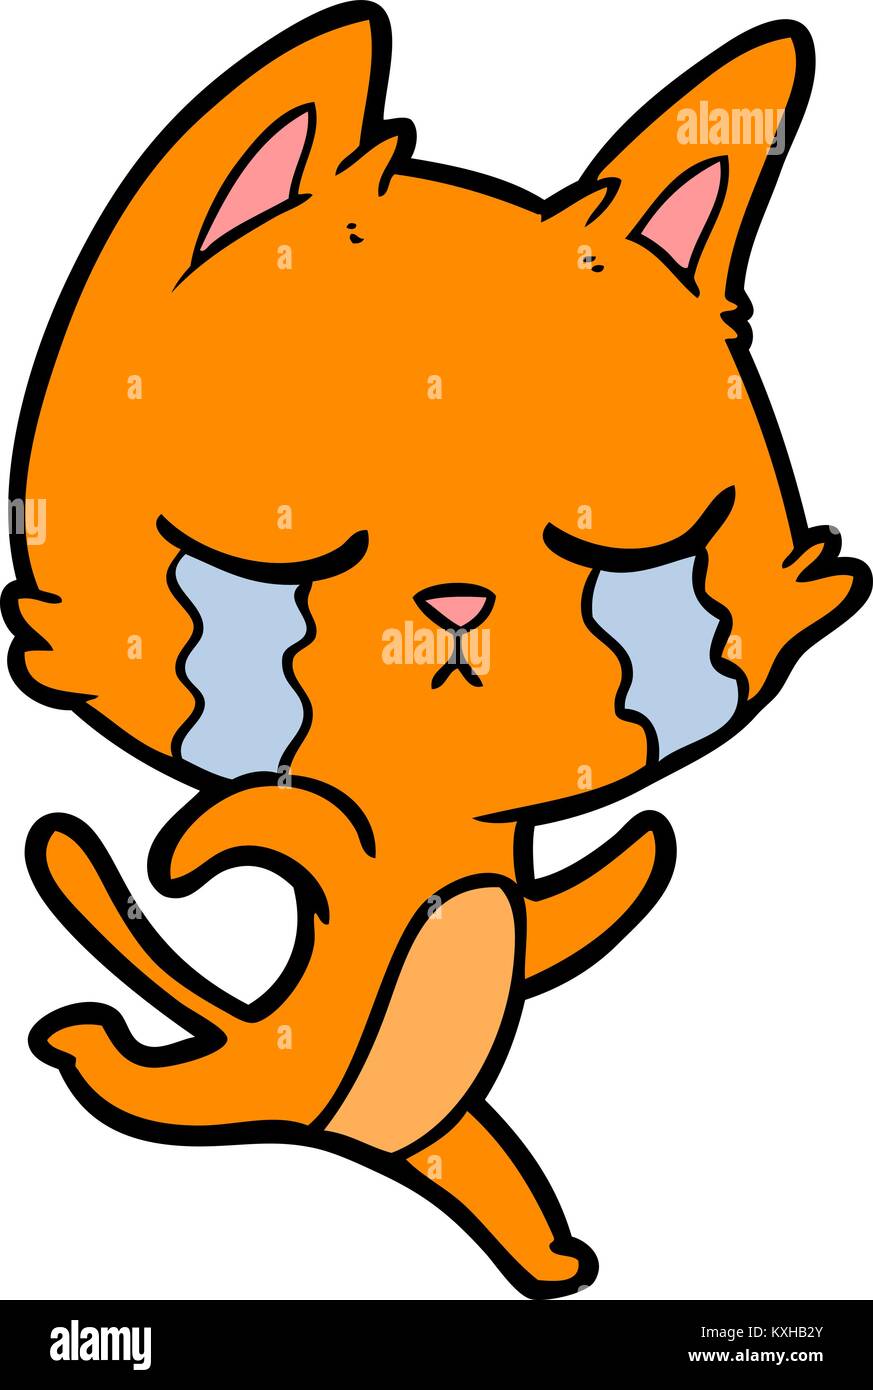 crying cartoon cat Stock Vector